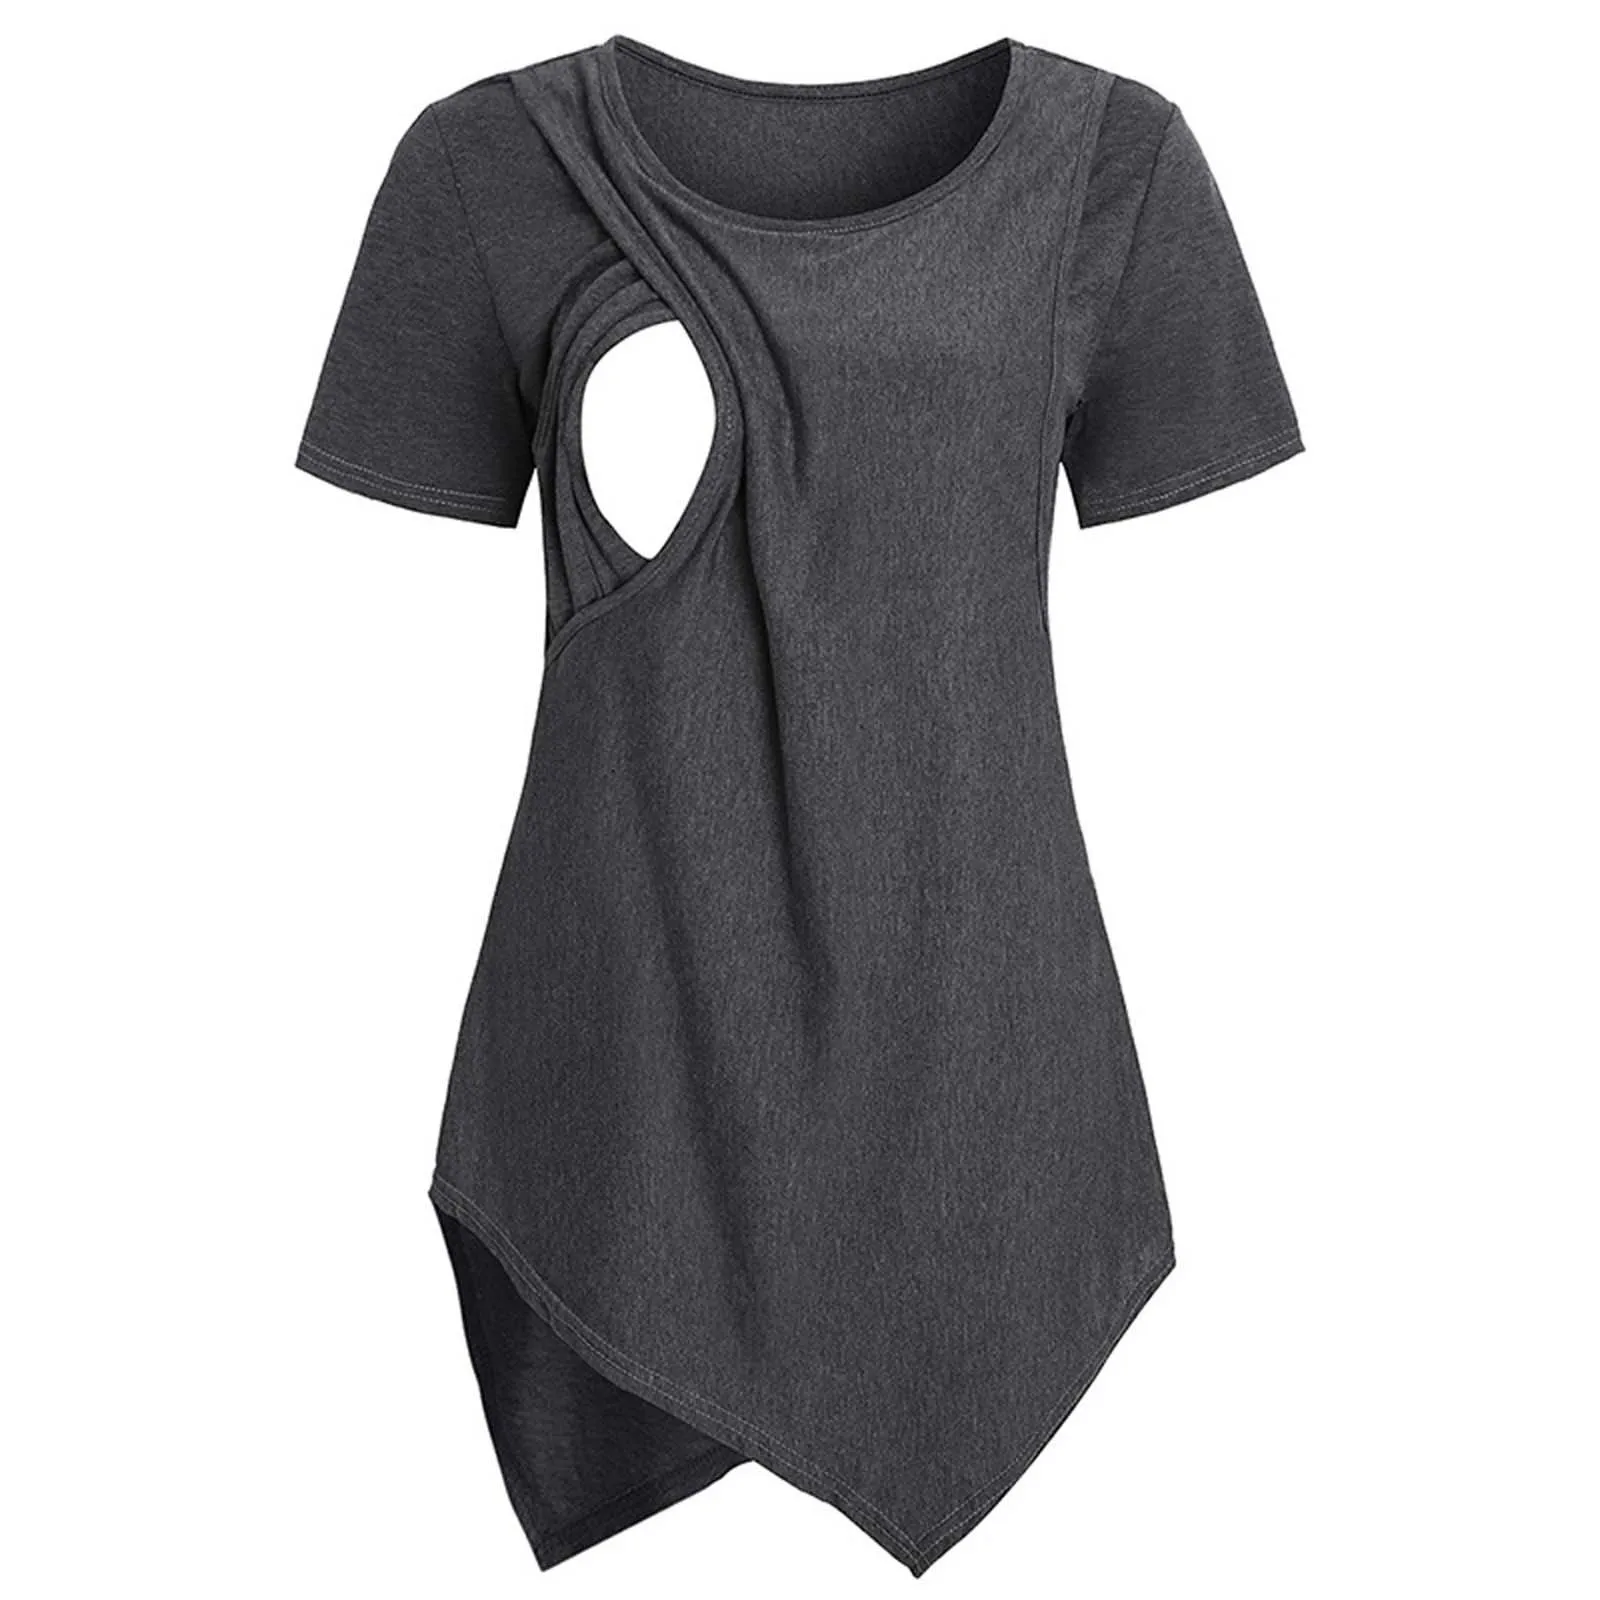 

Maternity T-Shirt Fashion Polyester Short Sleeve Solid Color Nursing Care Top VêTements Grossesse éTé Zwanger одежда для F4